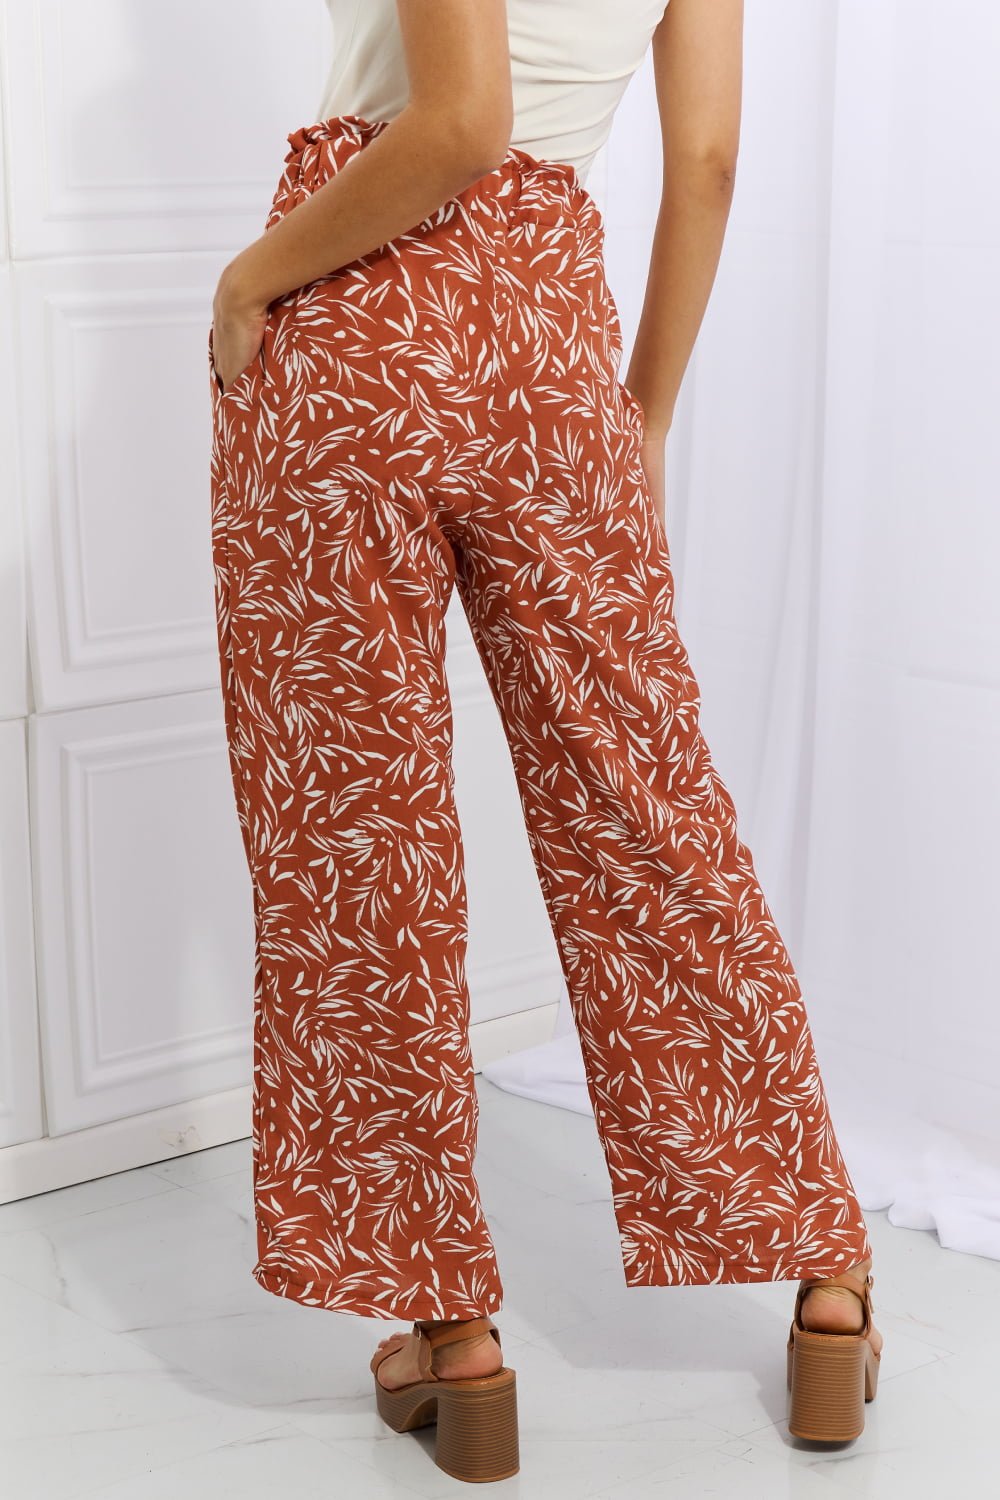 Geometric Printed Pants - Tangerine Goddess